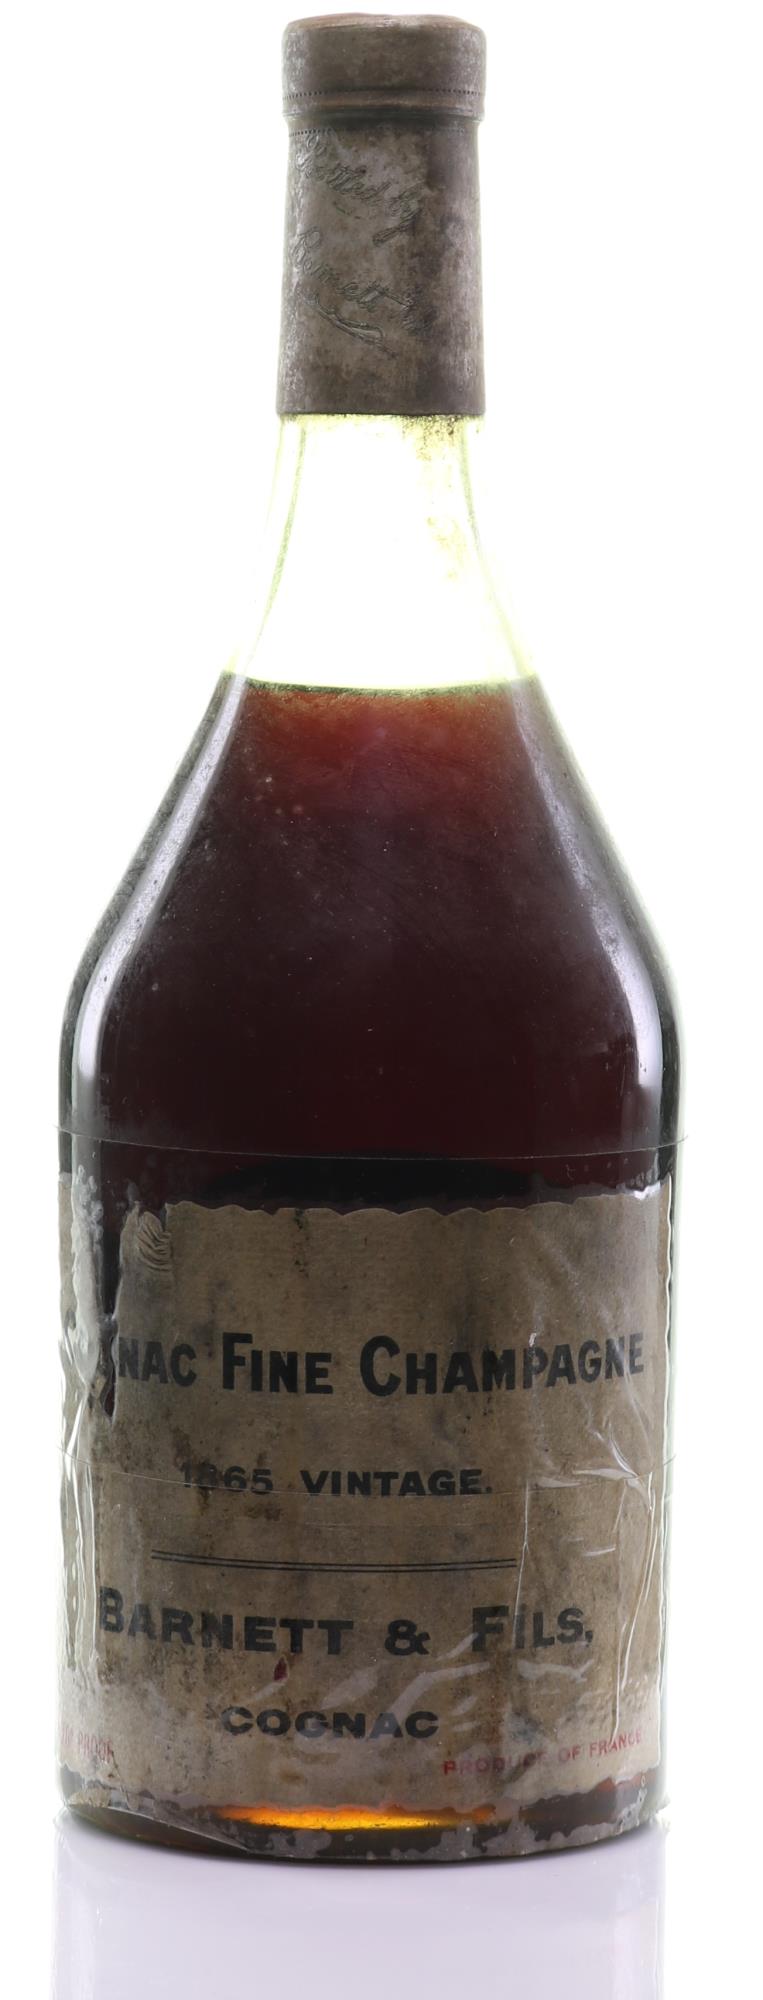 Barnett & Fils Cognac Fine Champagne 1865 Vintage - Rue Pinard